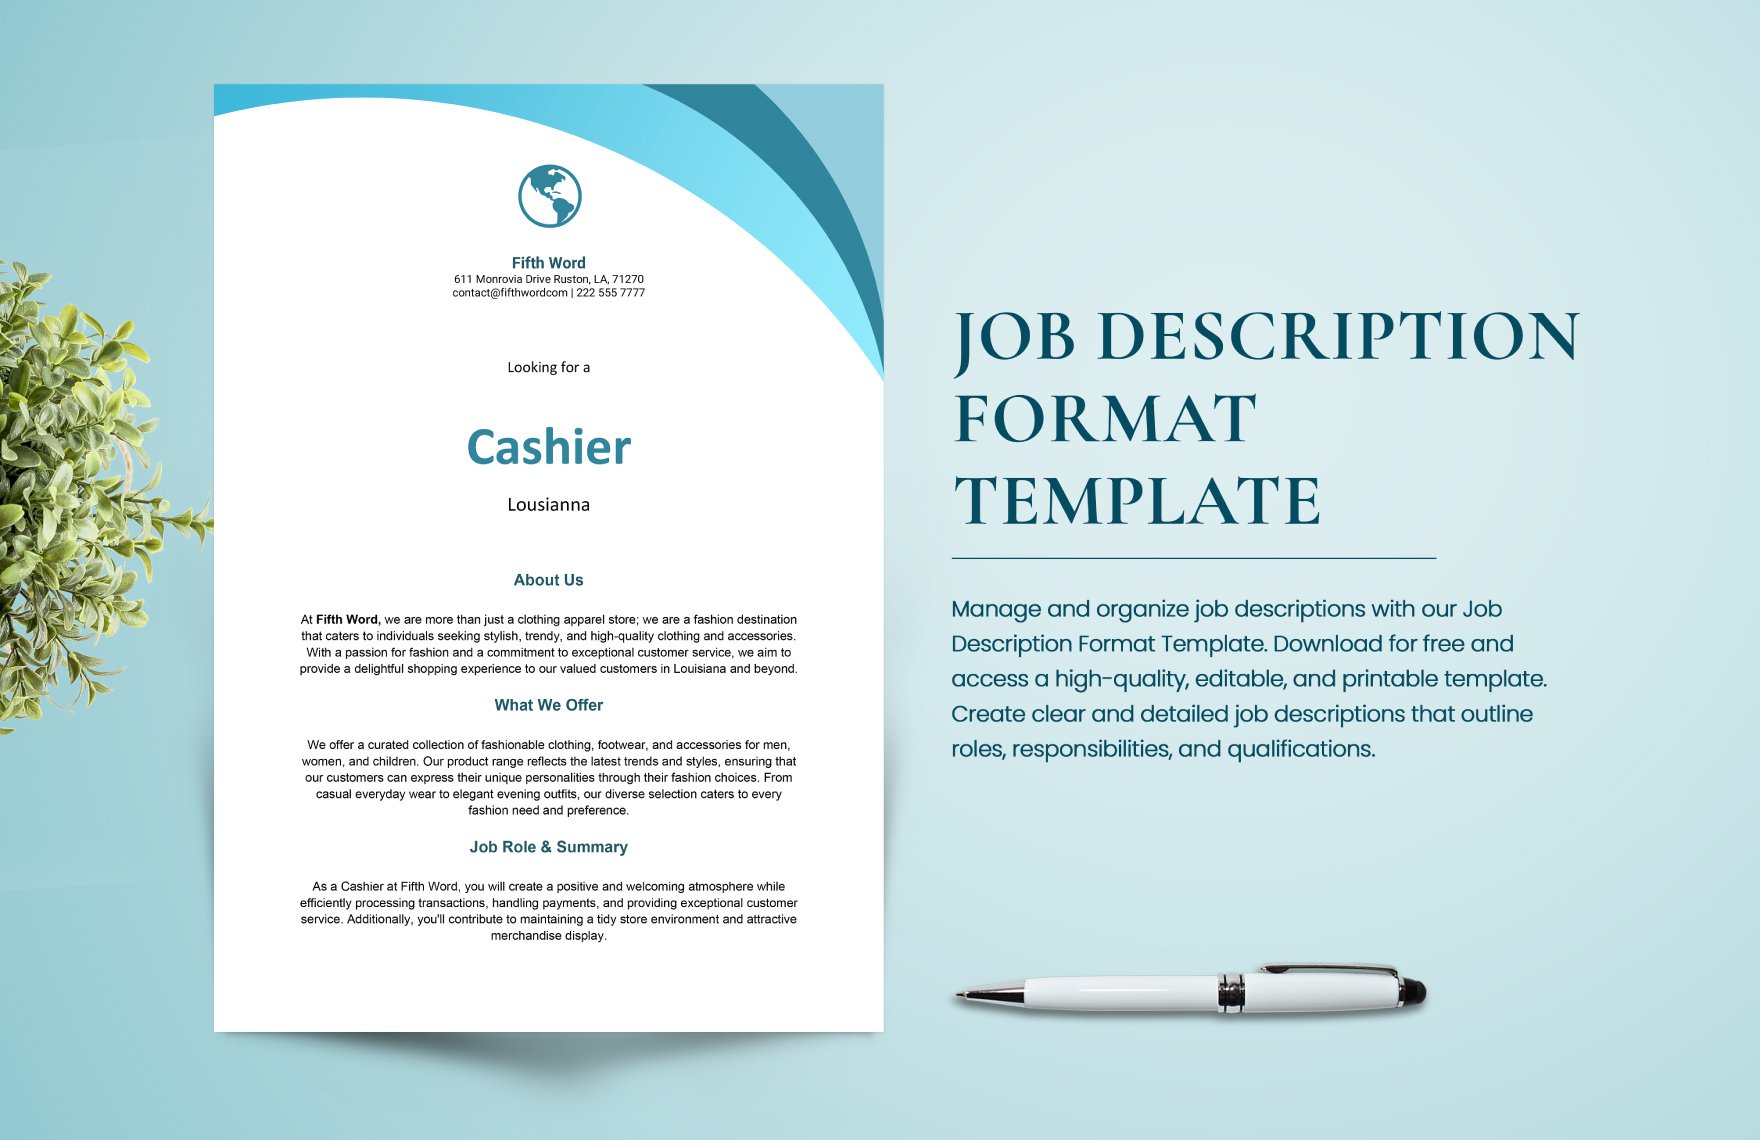 Job Description Format Template